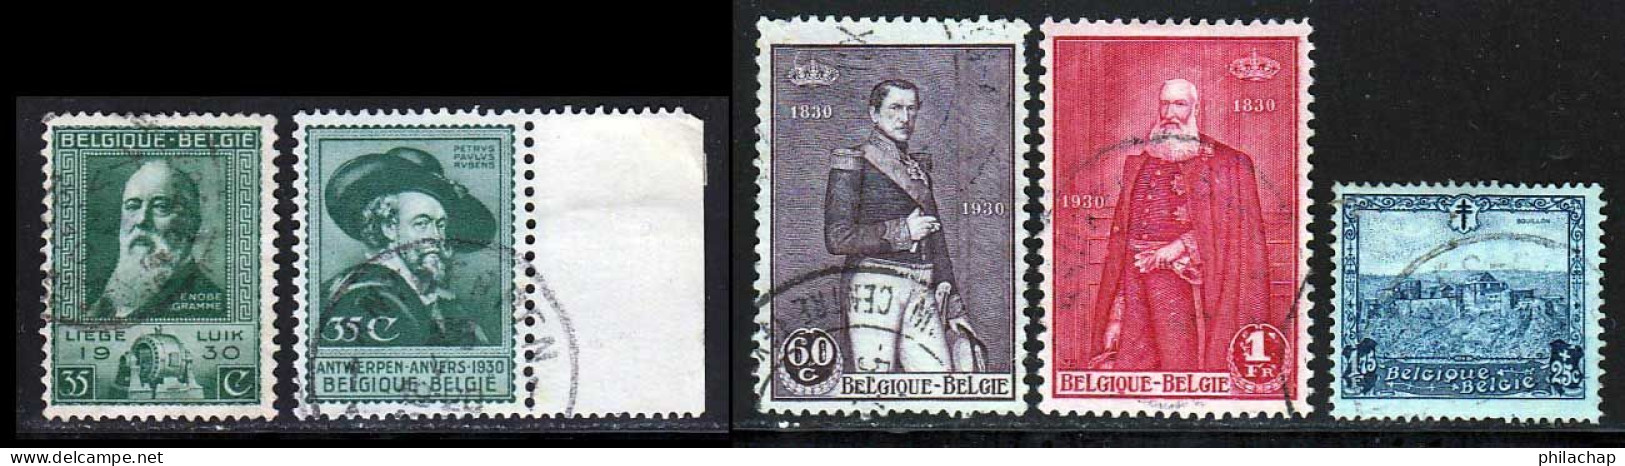 Belgique 1930 Yvert 299 - 300 - 302 - 303 - 313 (o) B Oblitere(s) - Used Stamps